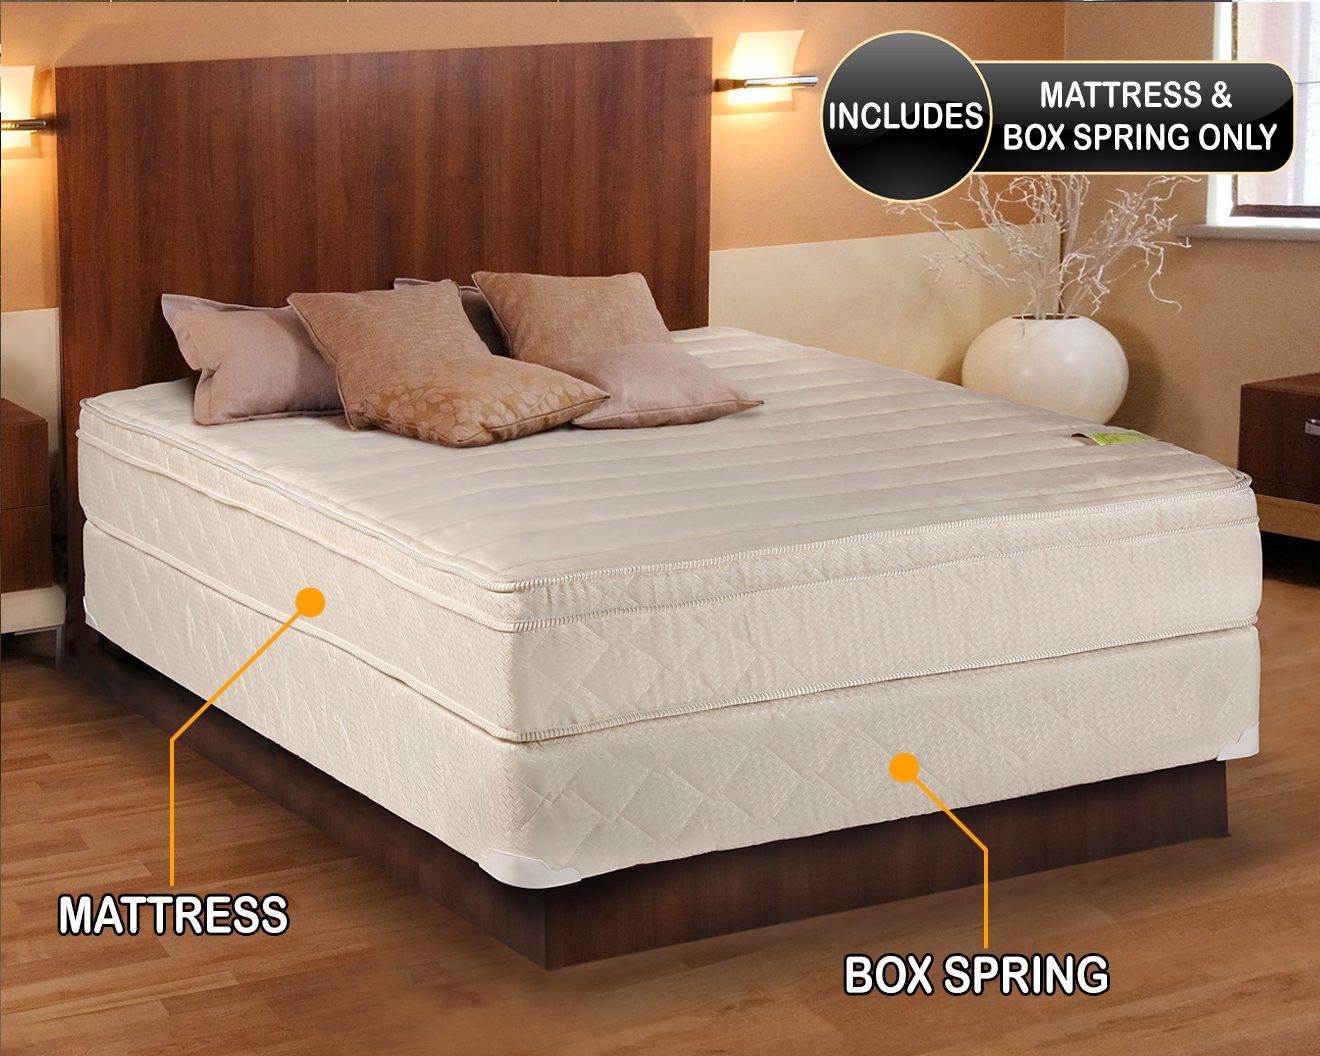 britanica foam encased mattress full size